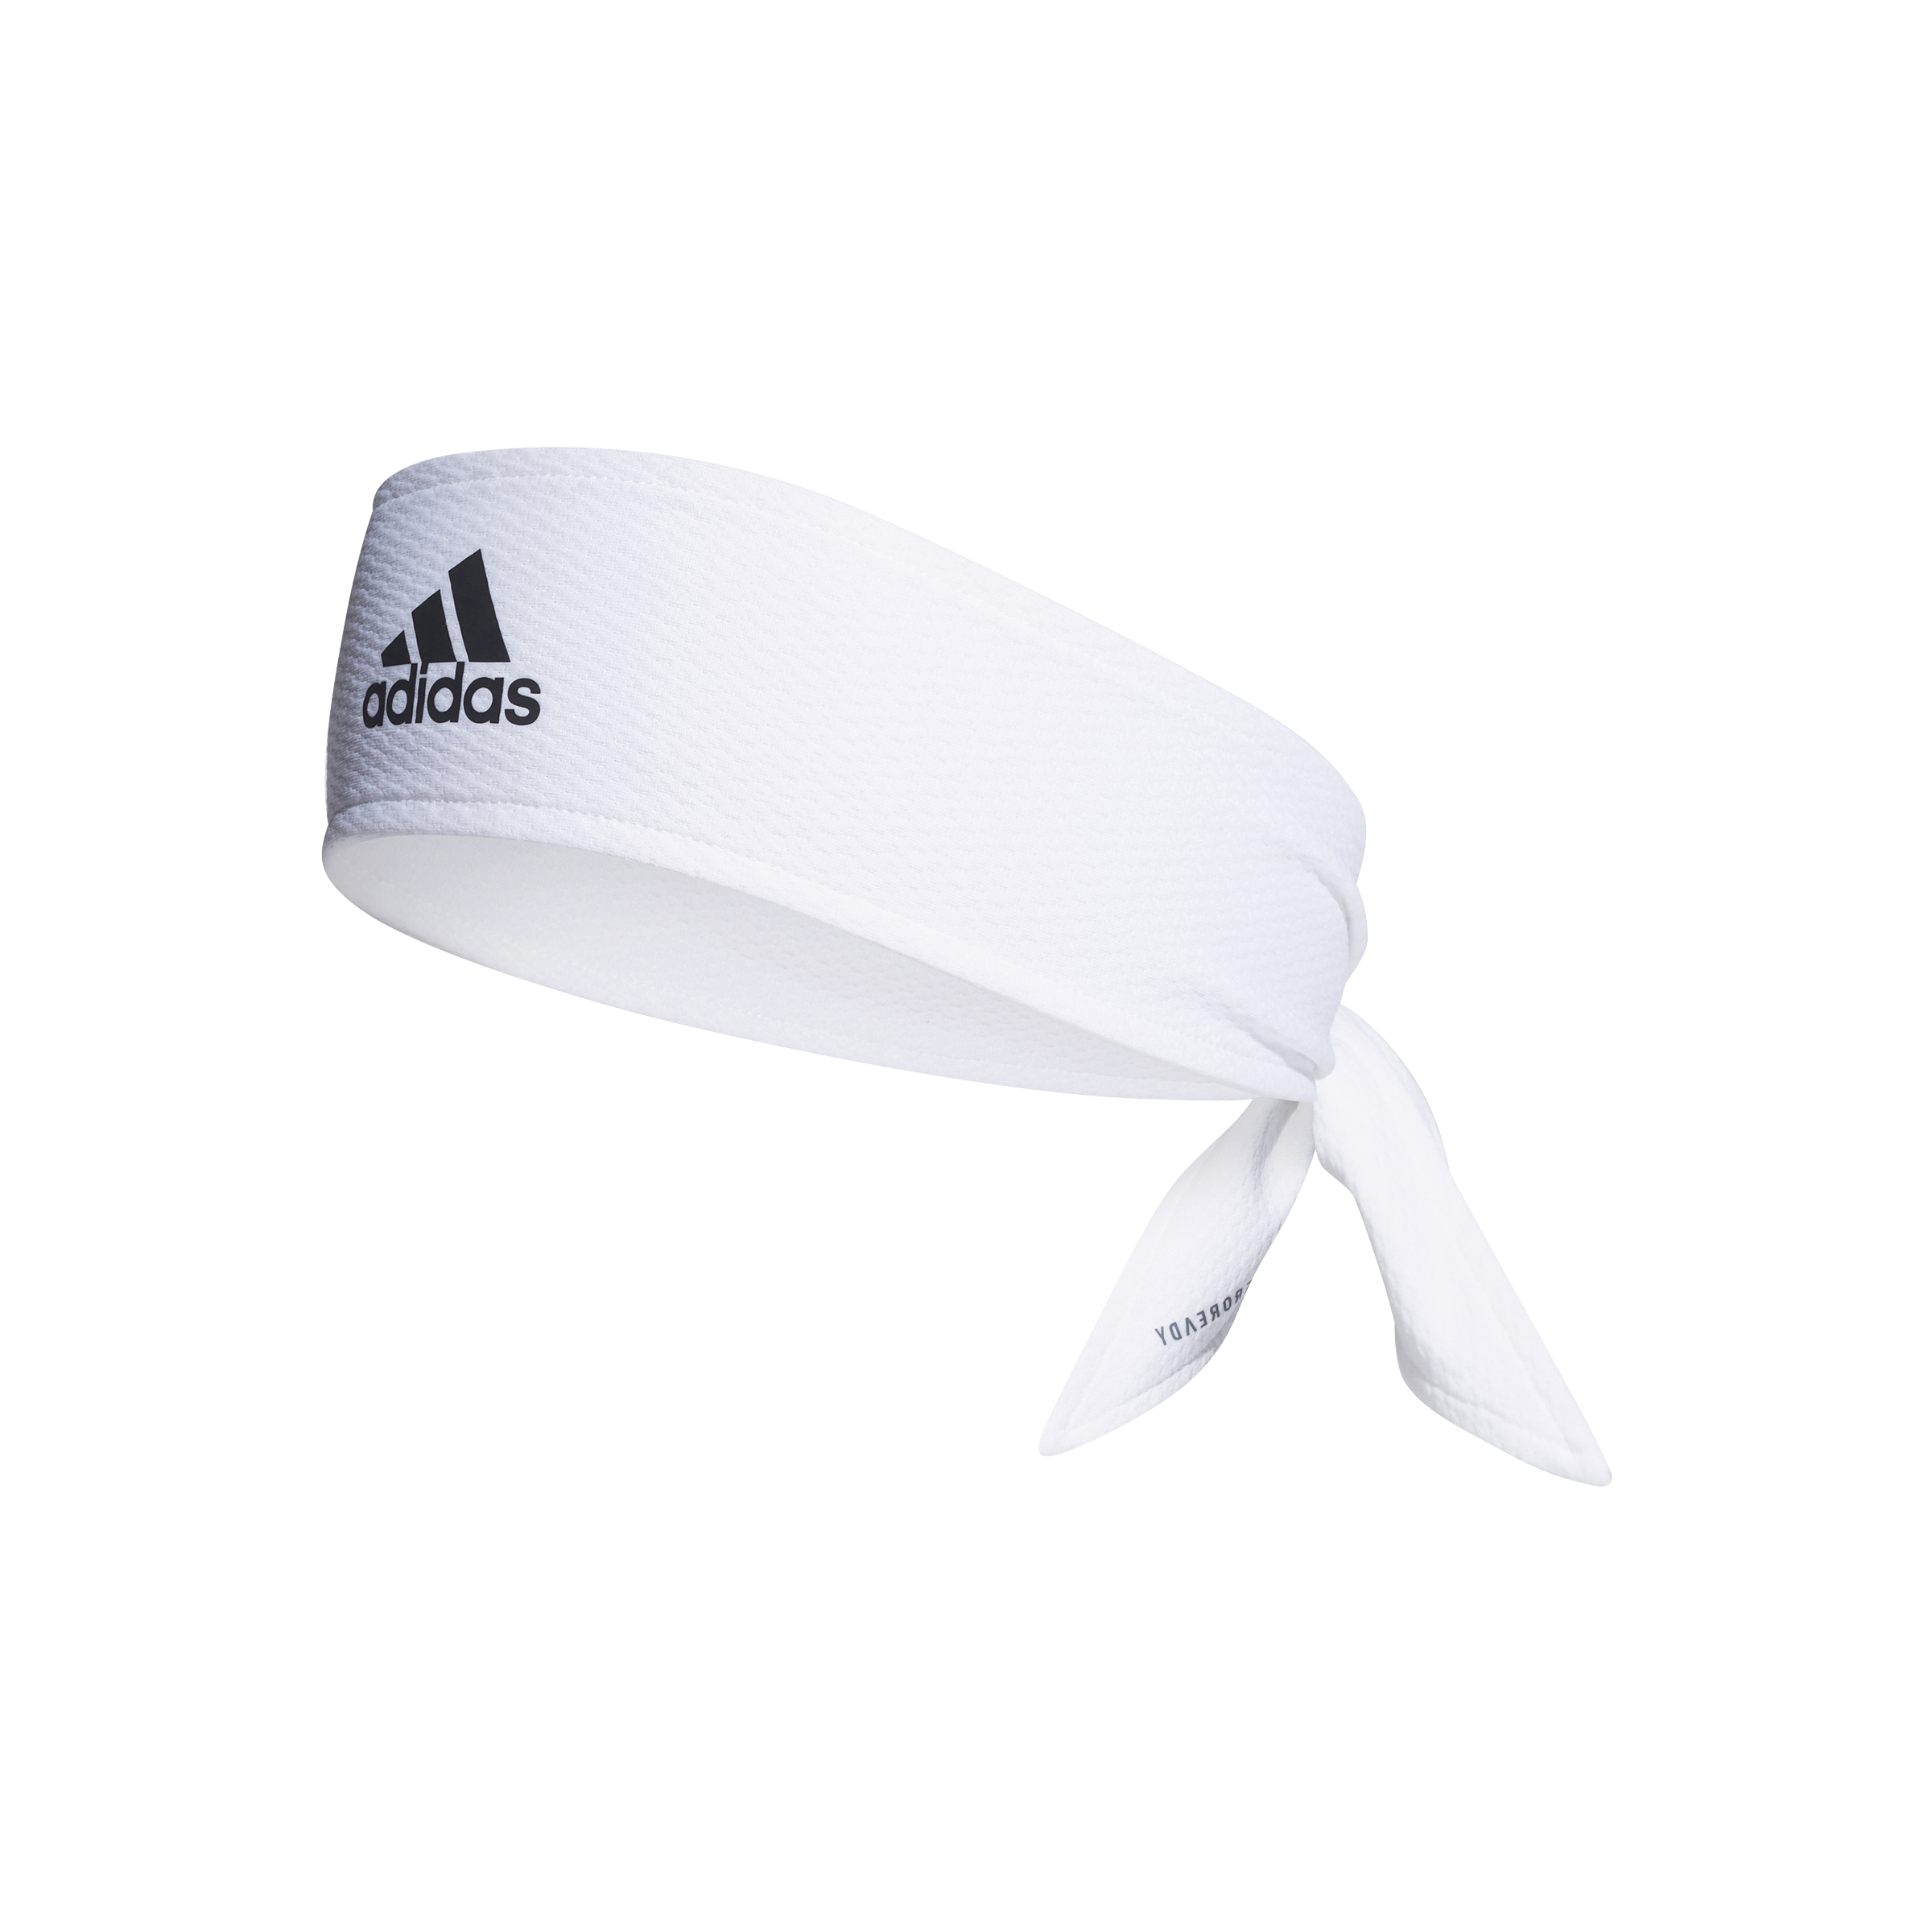 Adidas Aeroready Tieband (White)